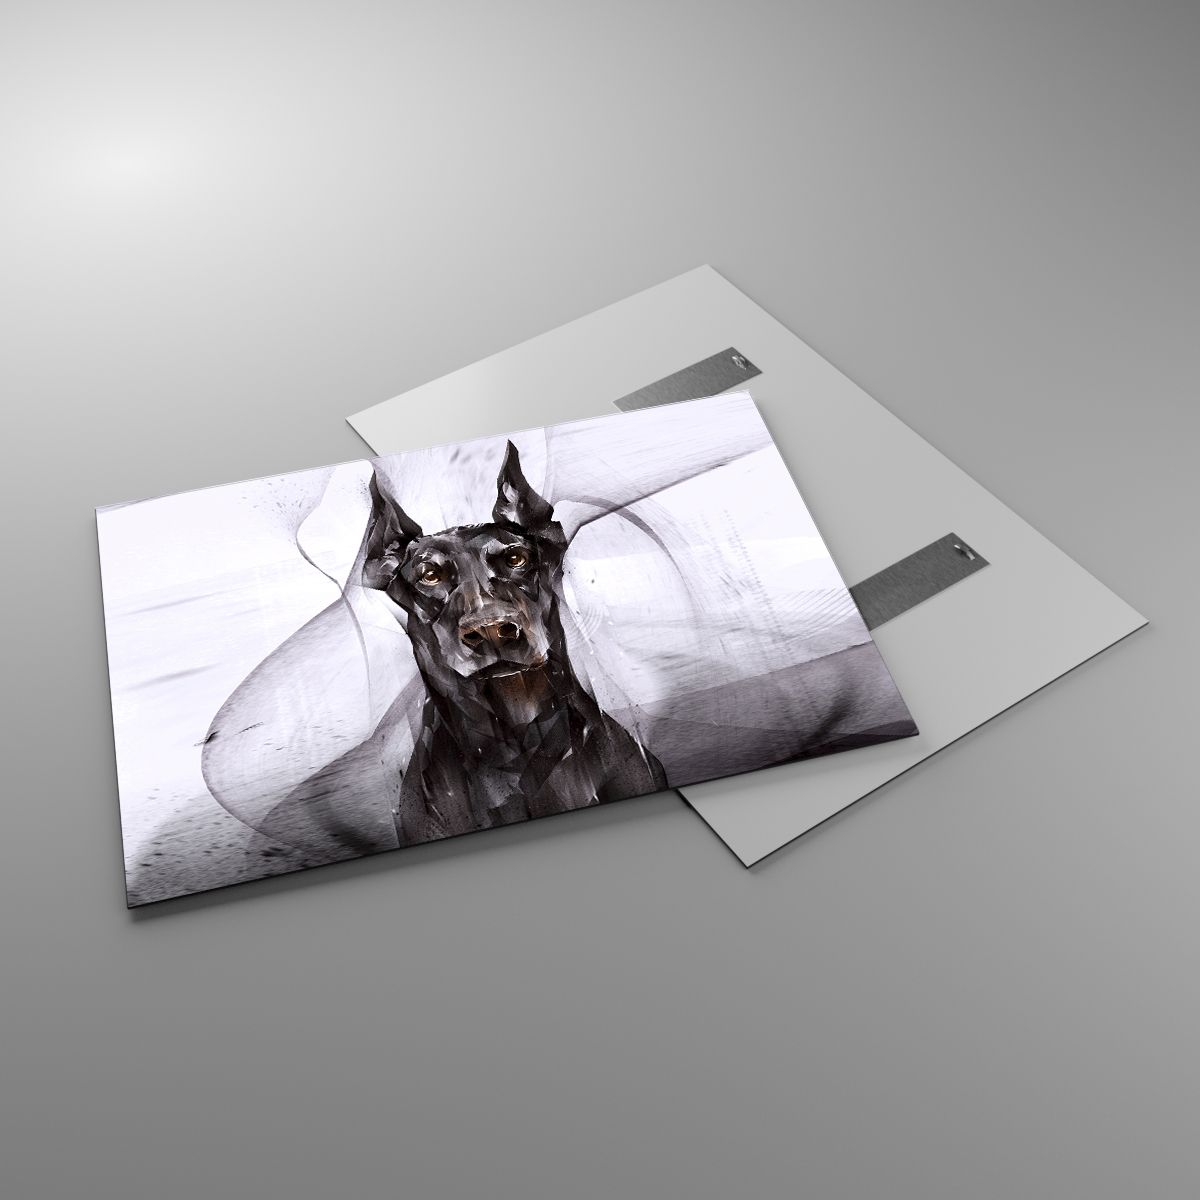 Glasbild Abstraktion, Glasbild Dobermann, Glasbild Hund, Glasbild Tiere, Glasbild Grafik